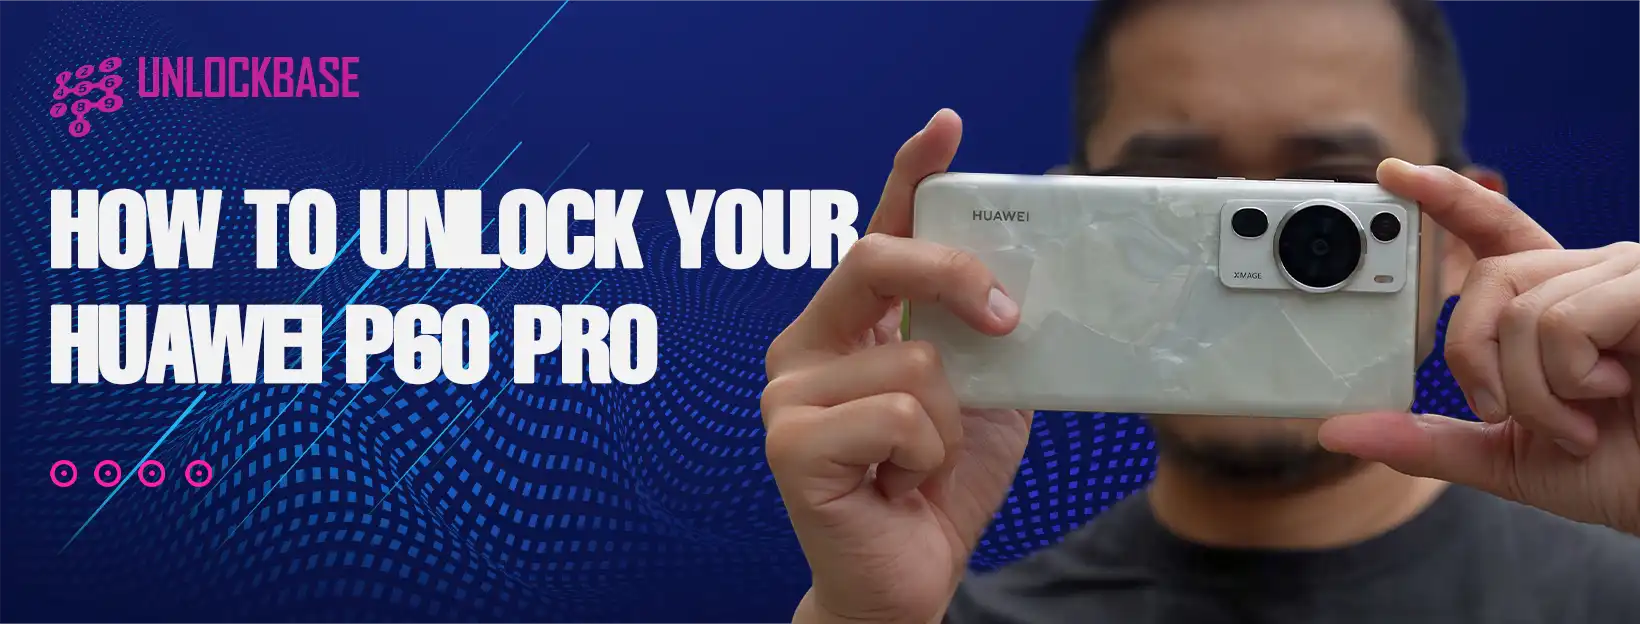 How to Unlock Your Huawei P60 Pro - UnlockBase